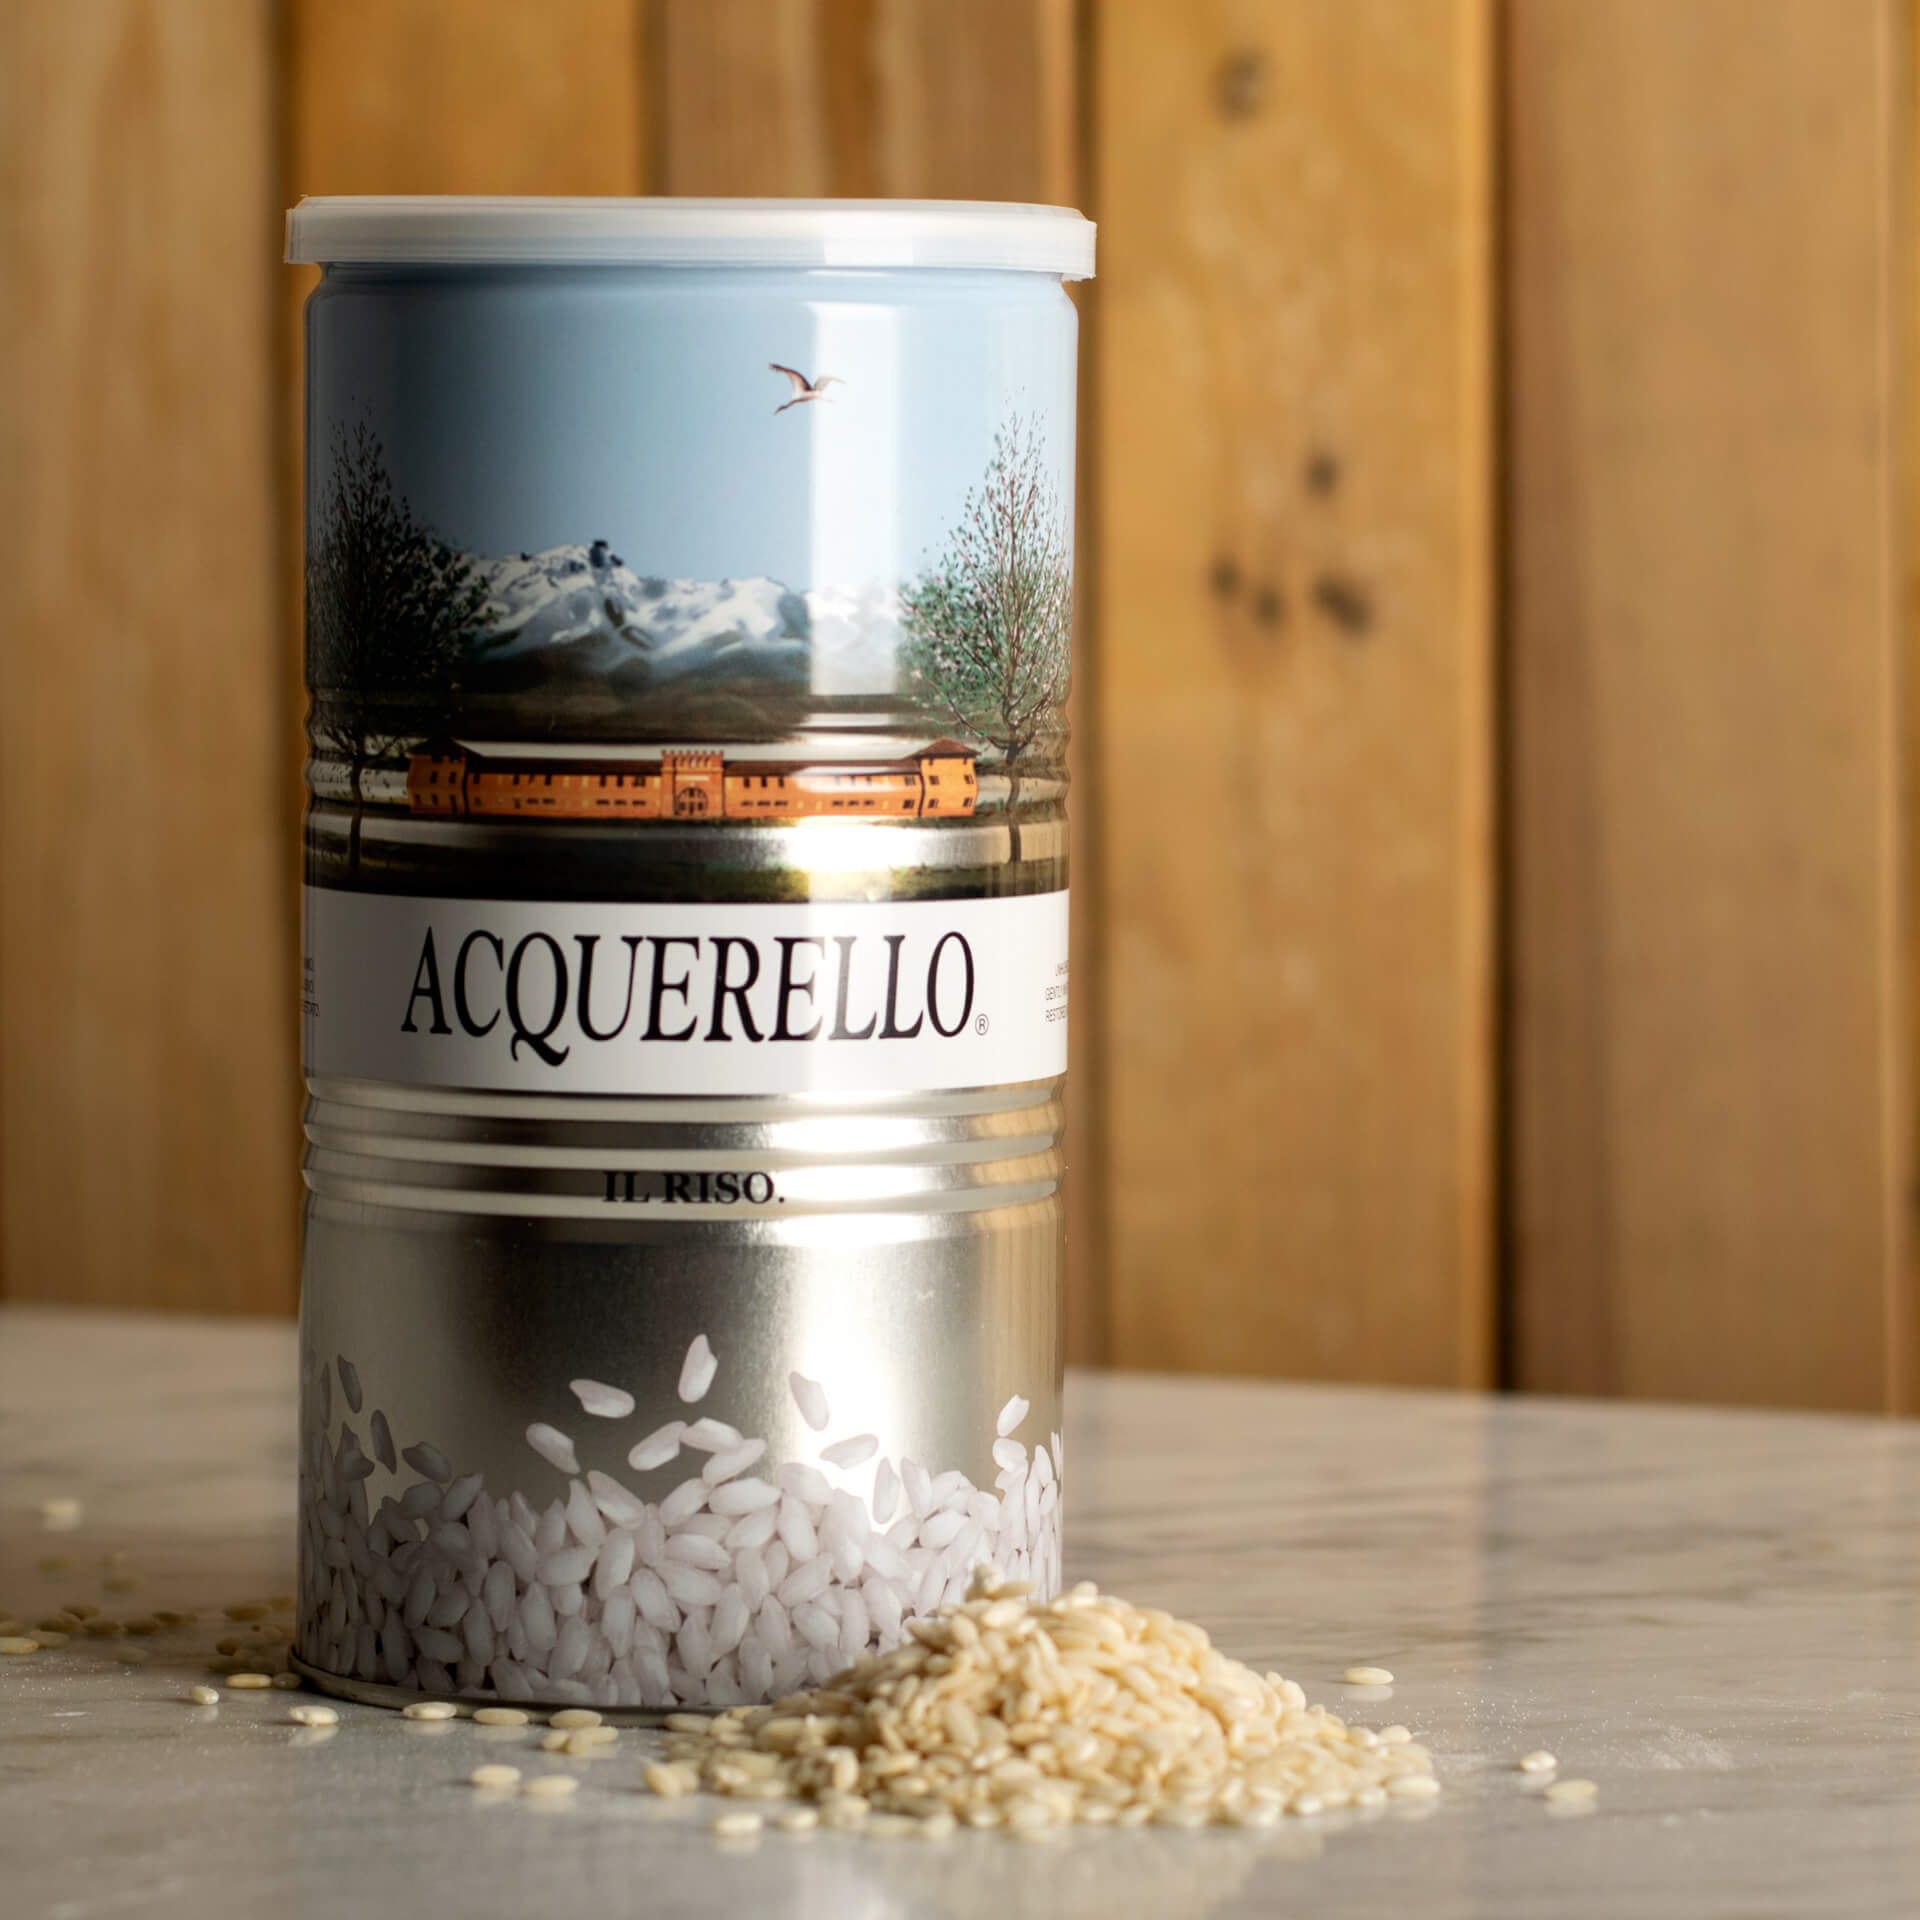 Acquerello Rice 1 Year Maturation - 1kg